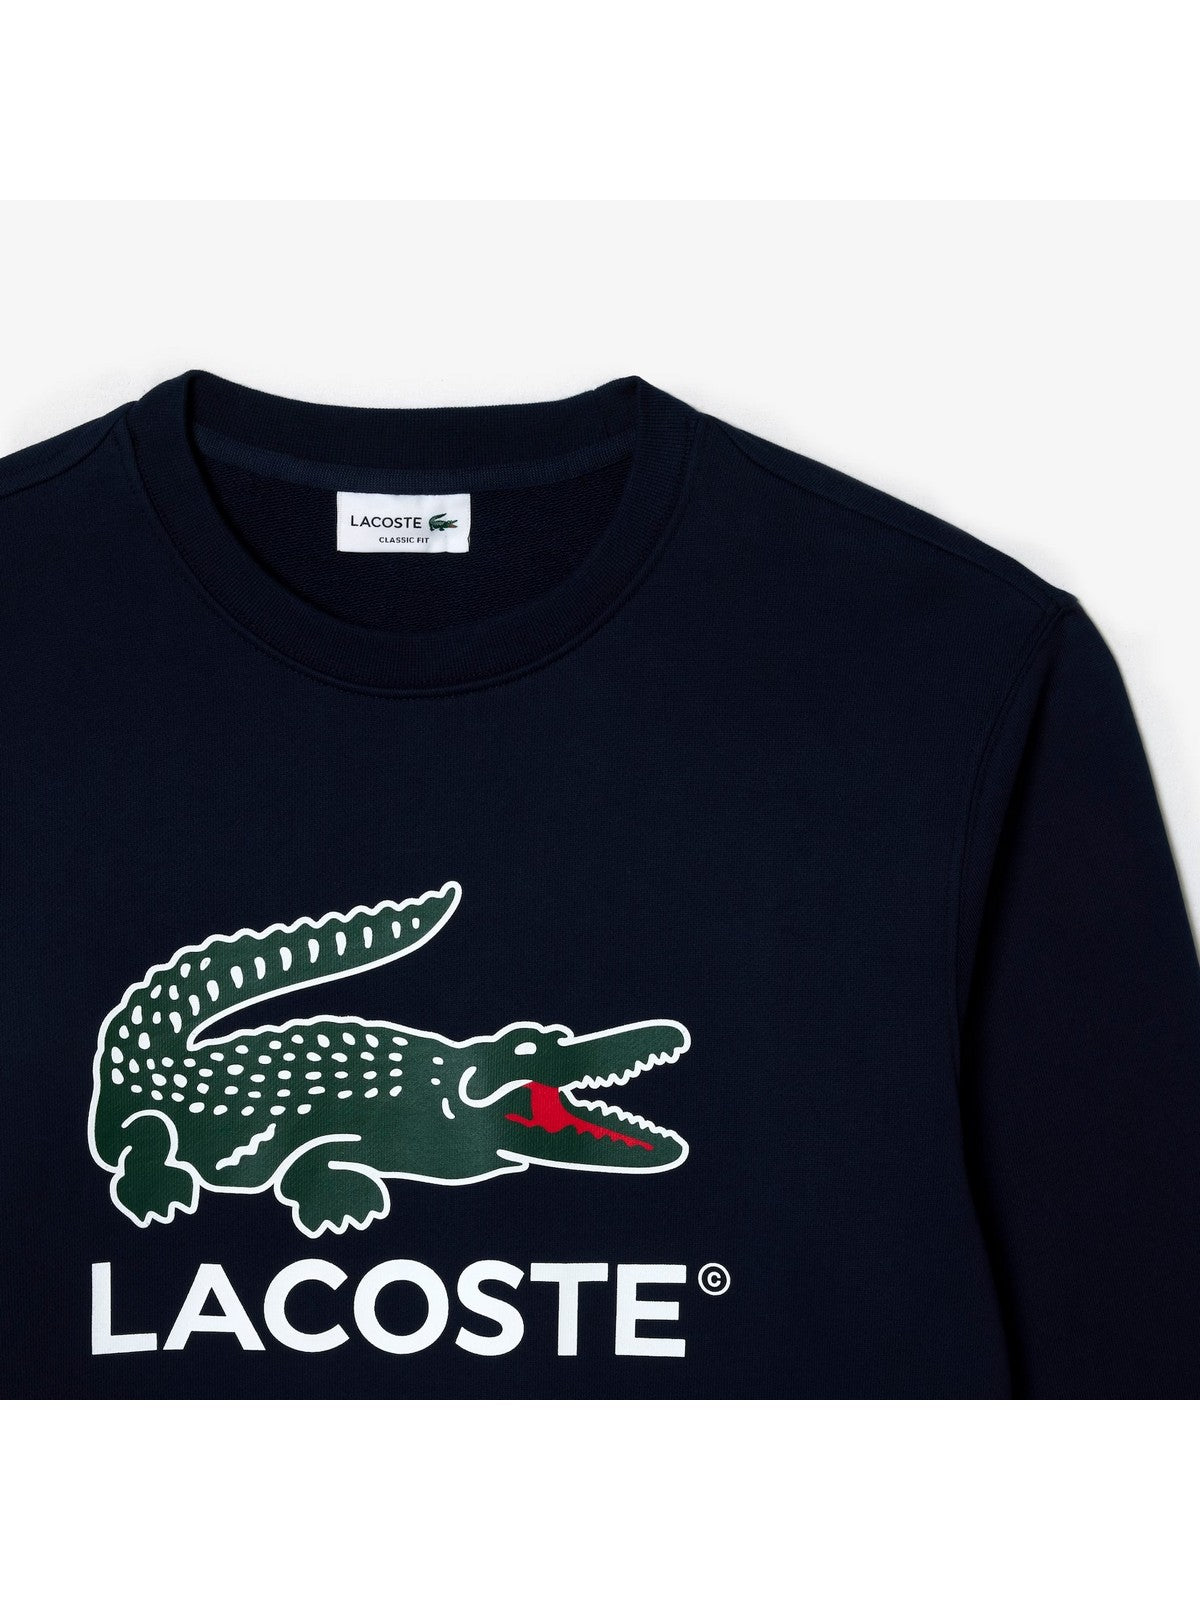 LACOSTE Hommes Sweatshirt SH1281 166 Bleu